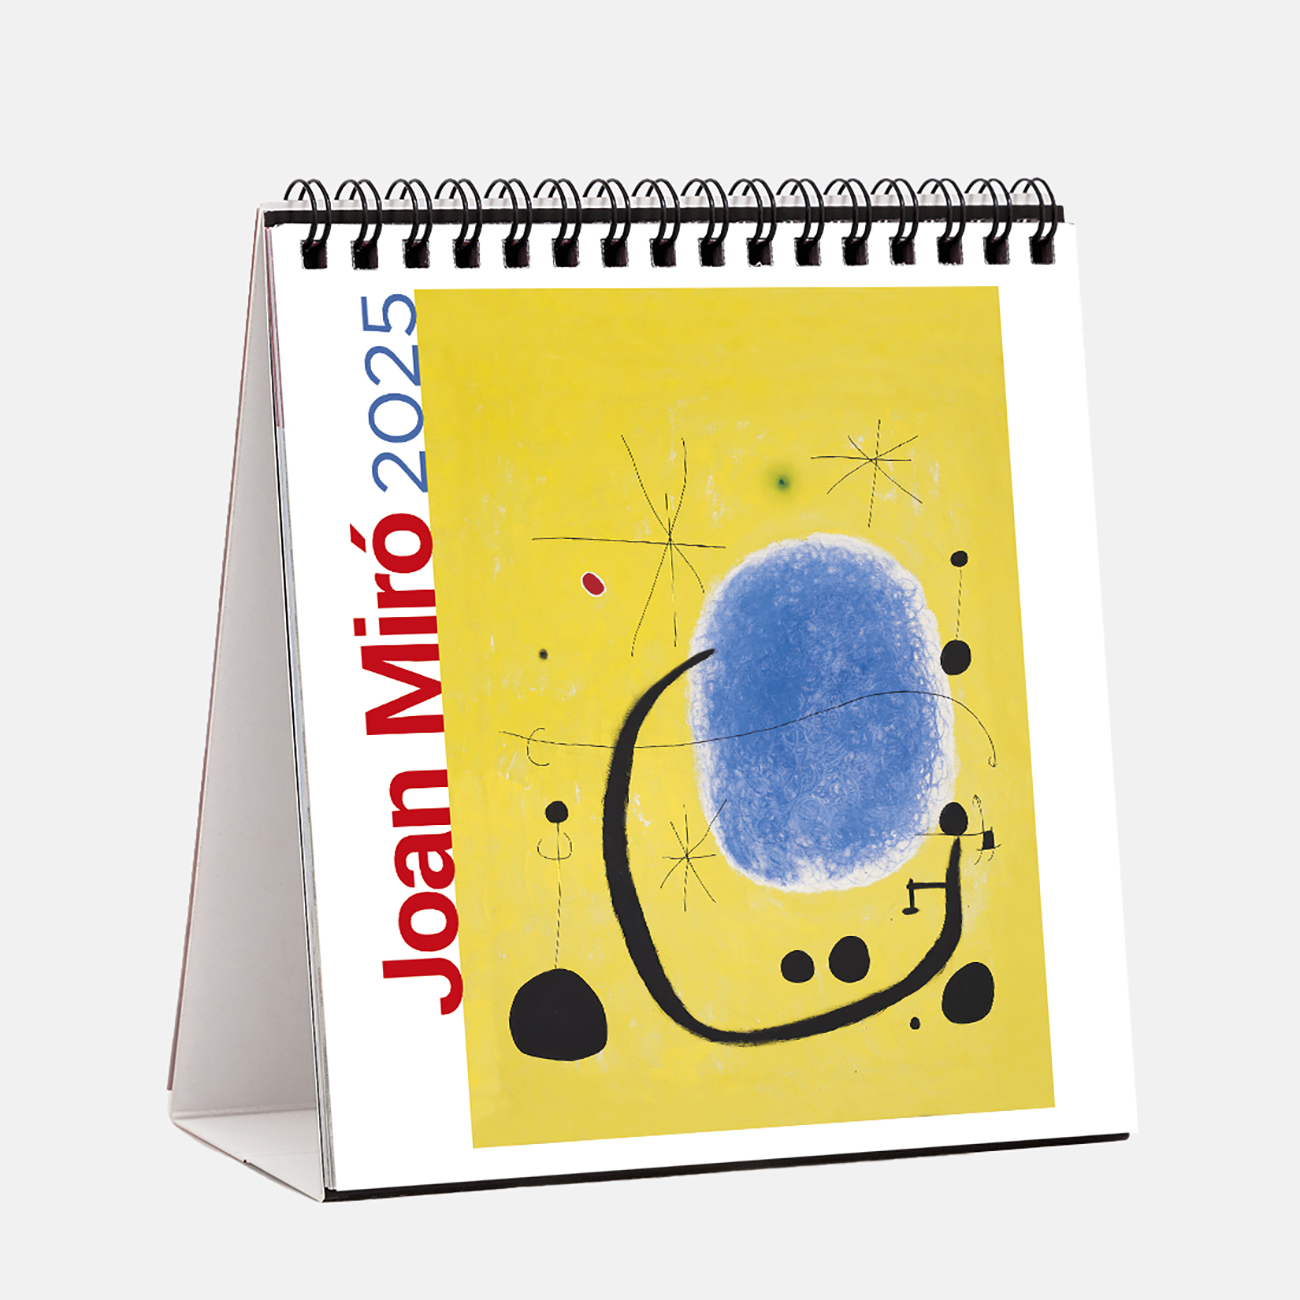 Calendrier 2025 Miró - Barcelona s25mi2 calendario sobremesa 2025 joan miro barcelona